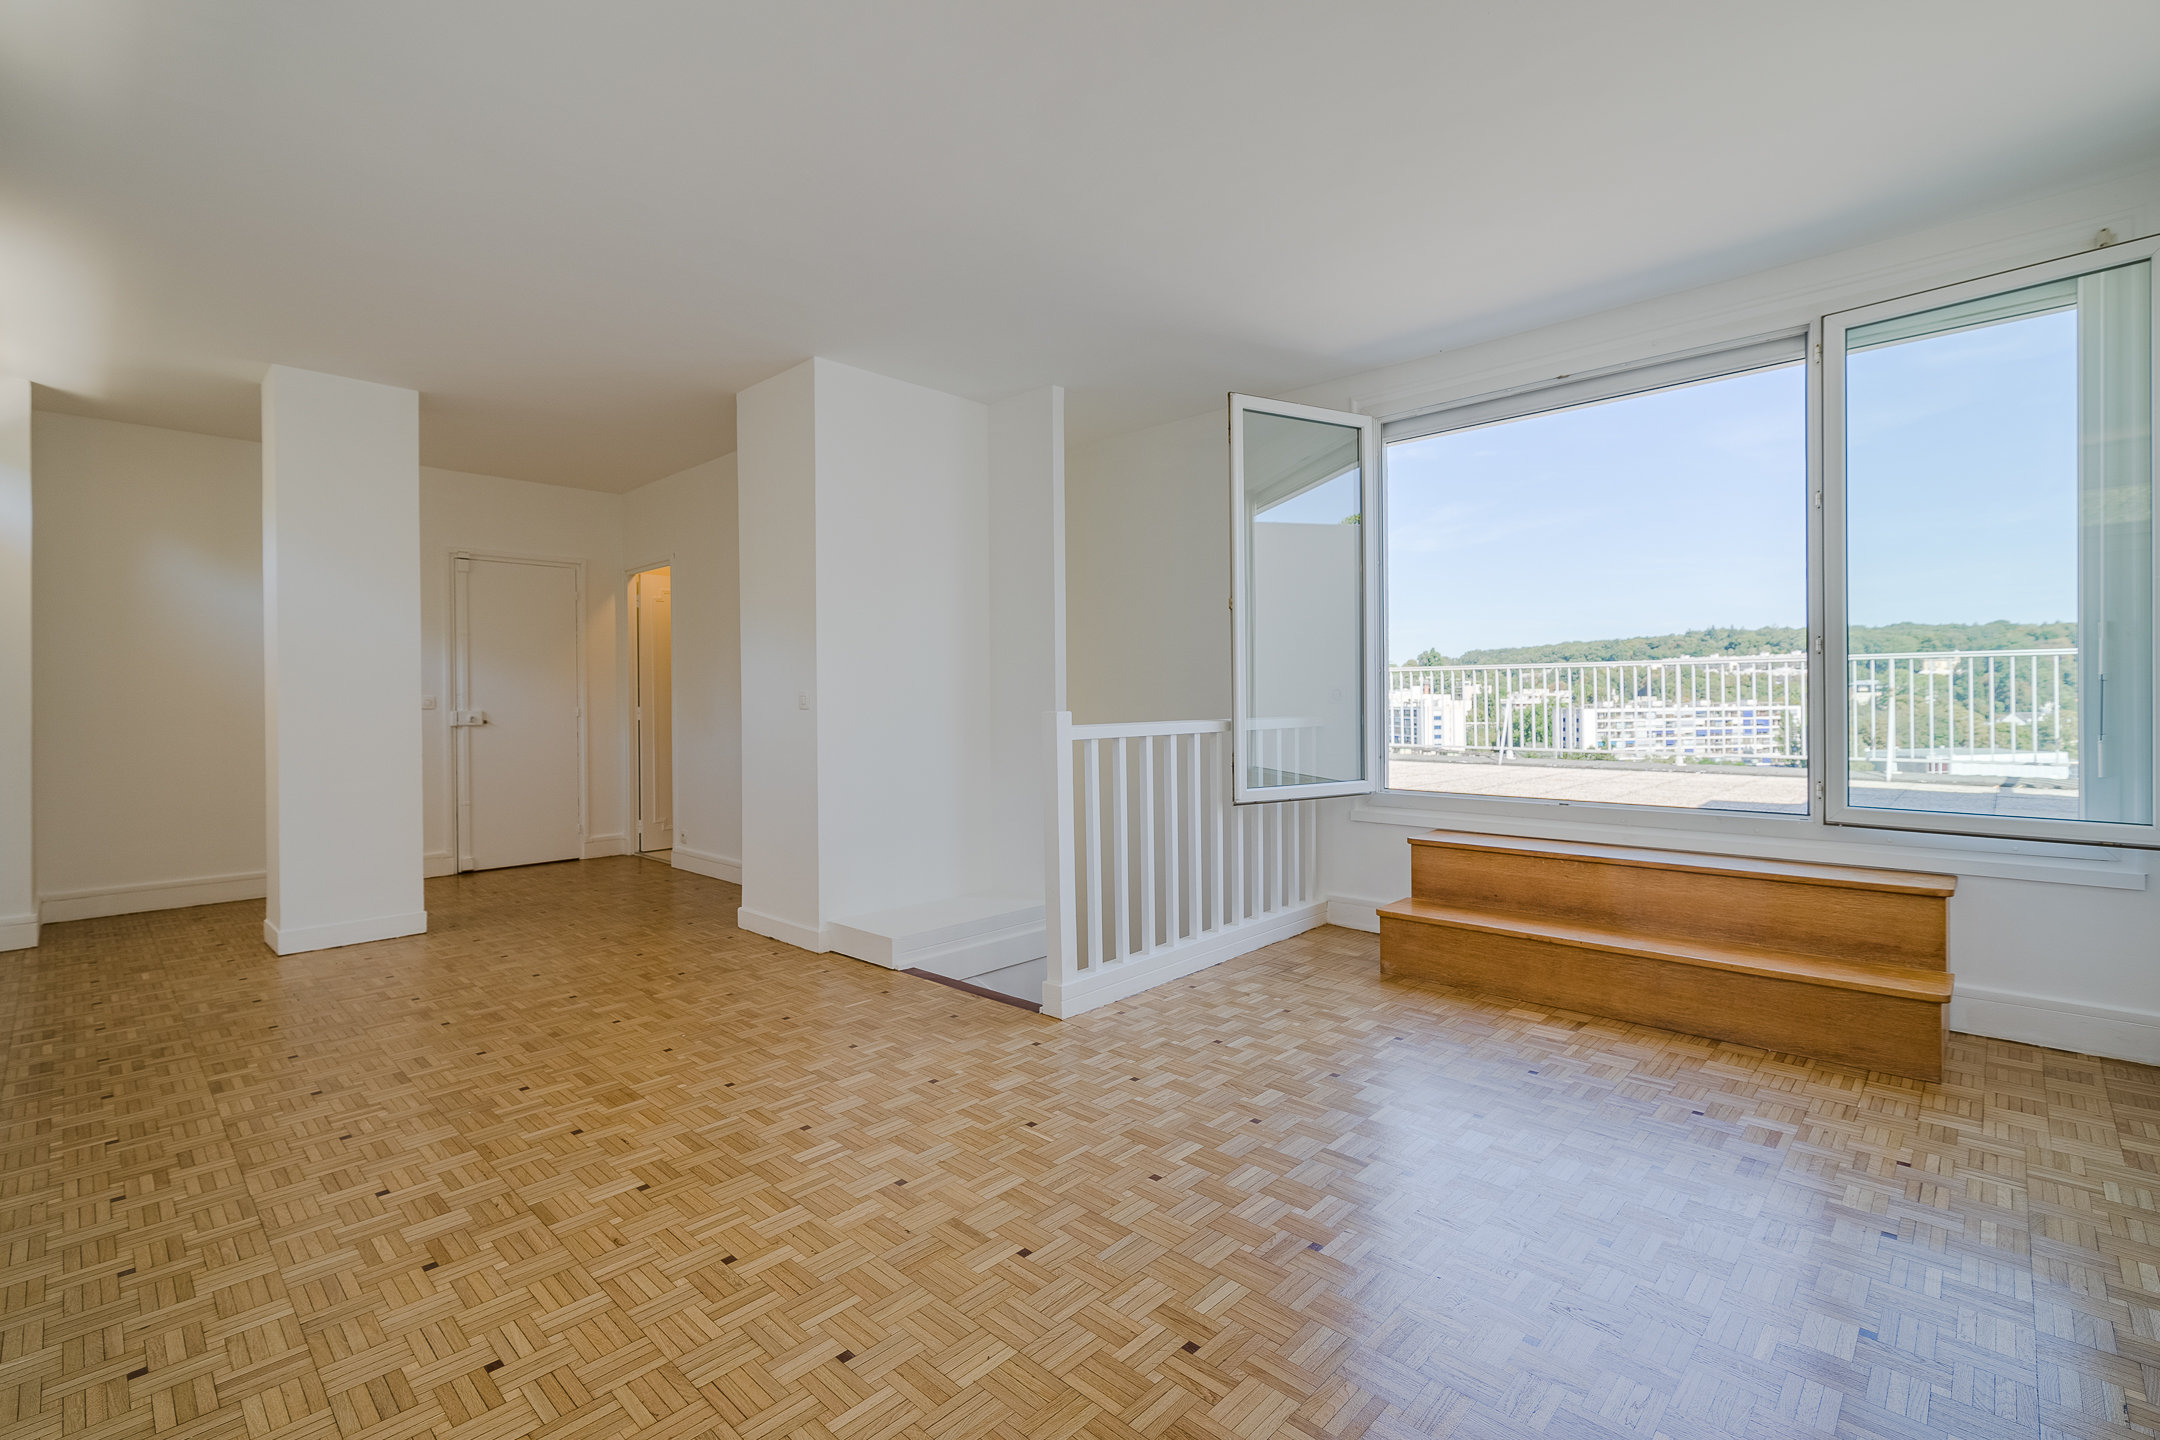 Appartement a louer ville-d'avray - 4 pièce(s) - 137.28 m2 - Surfyn